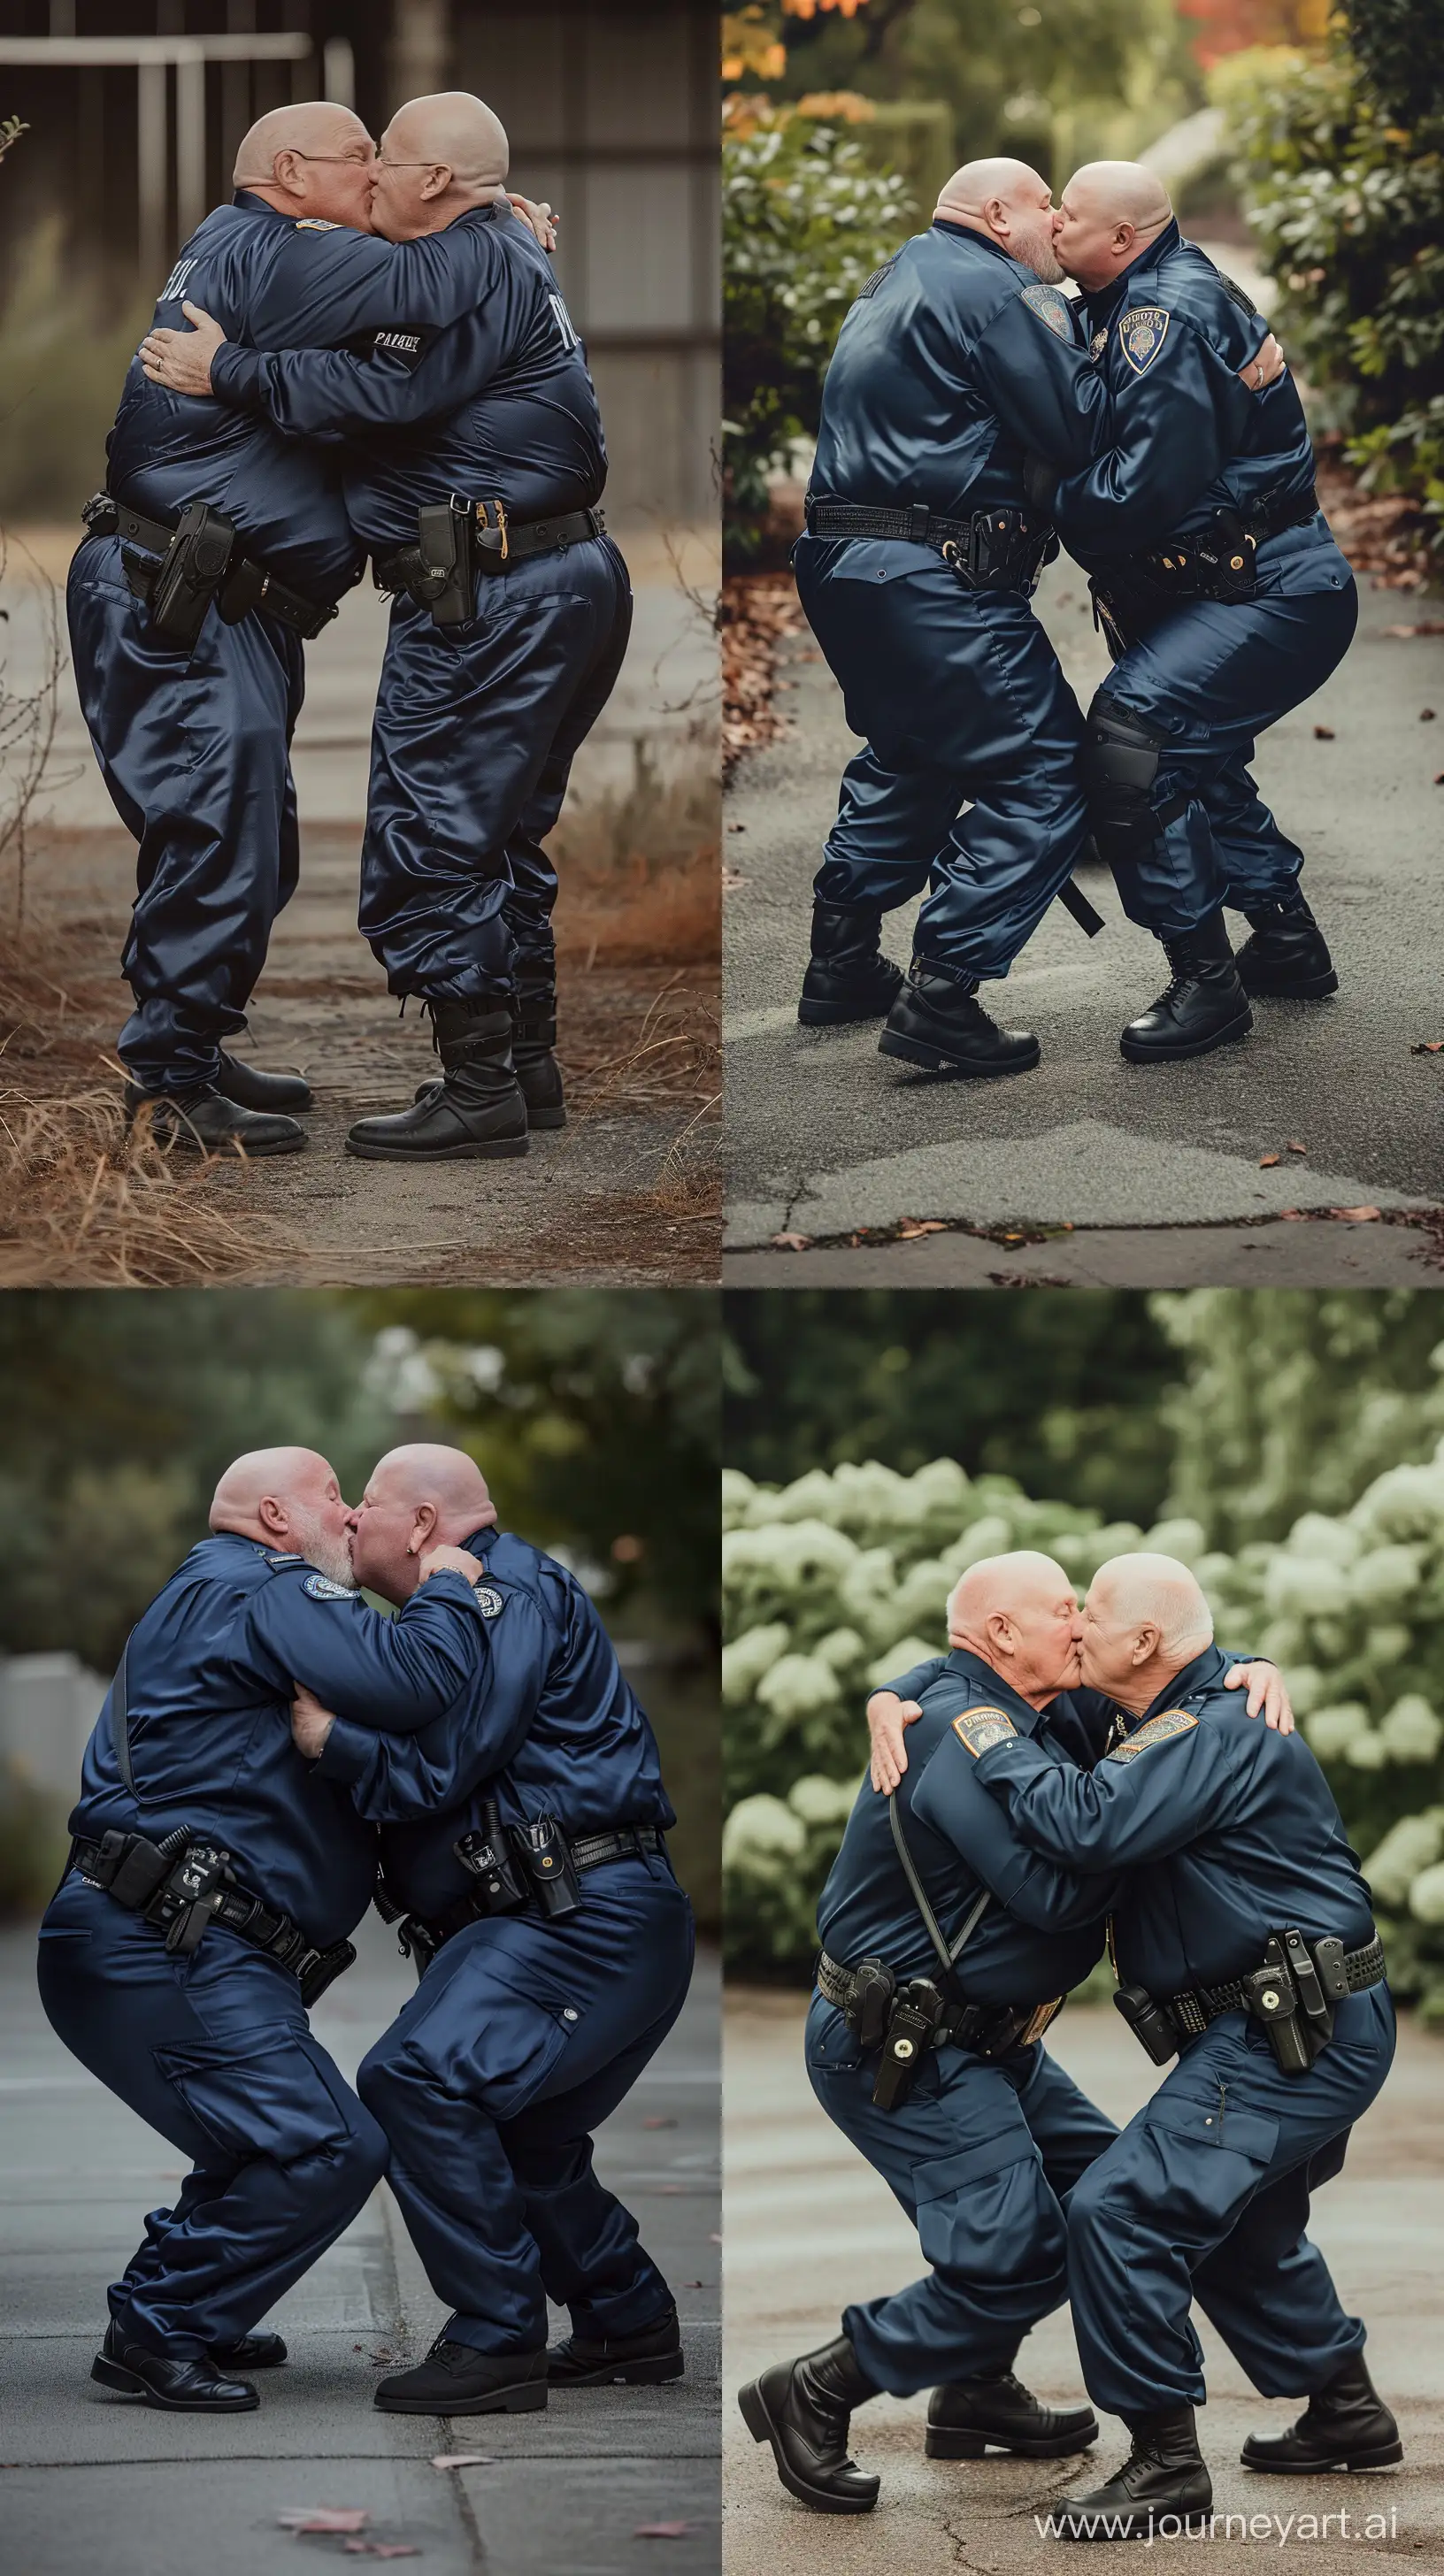 Elderly-Partners-Embrace-in-Navy-Police-Uniforms